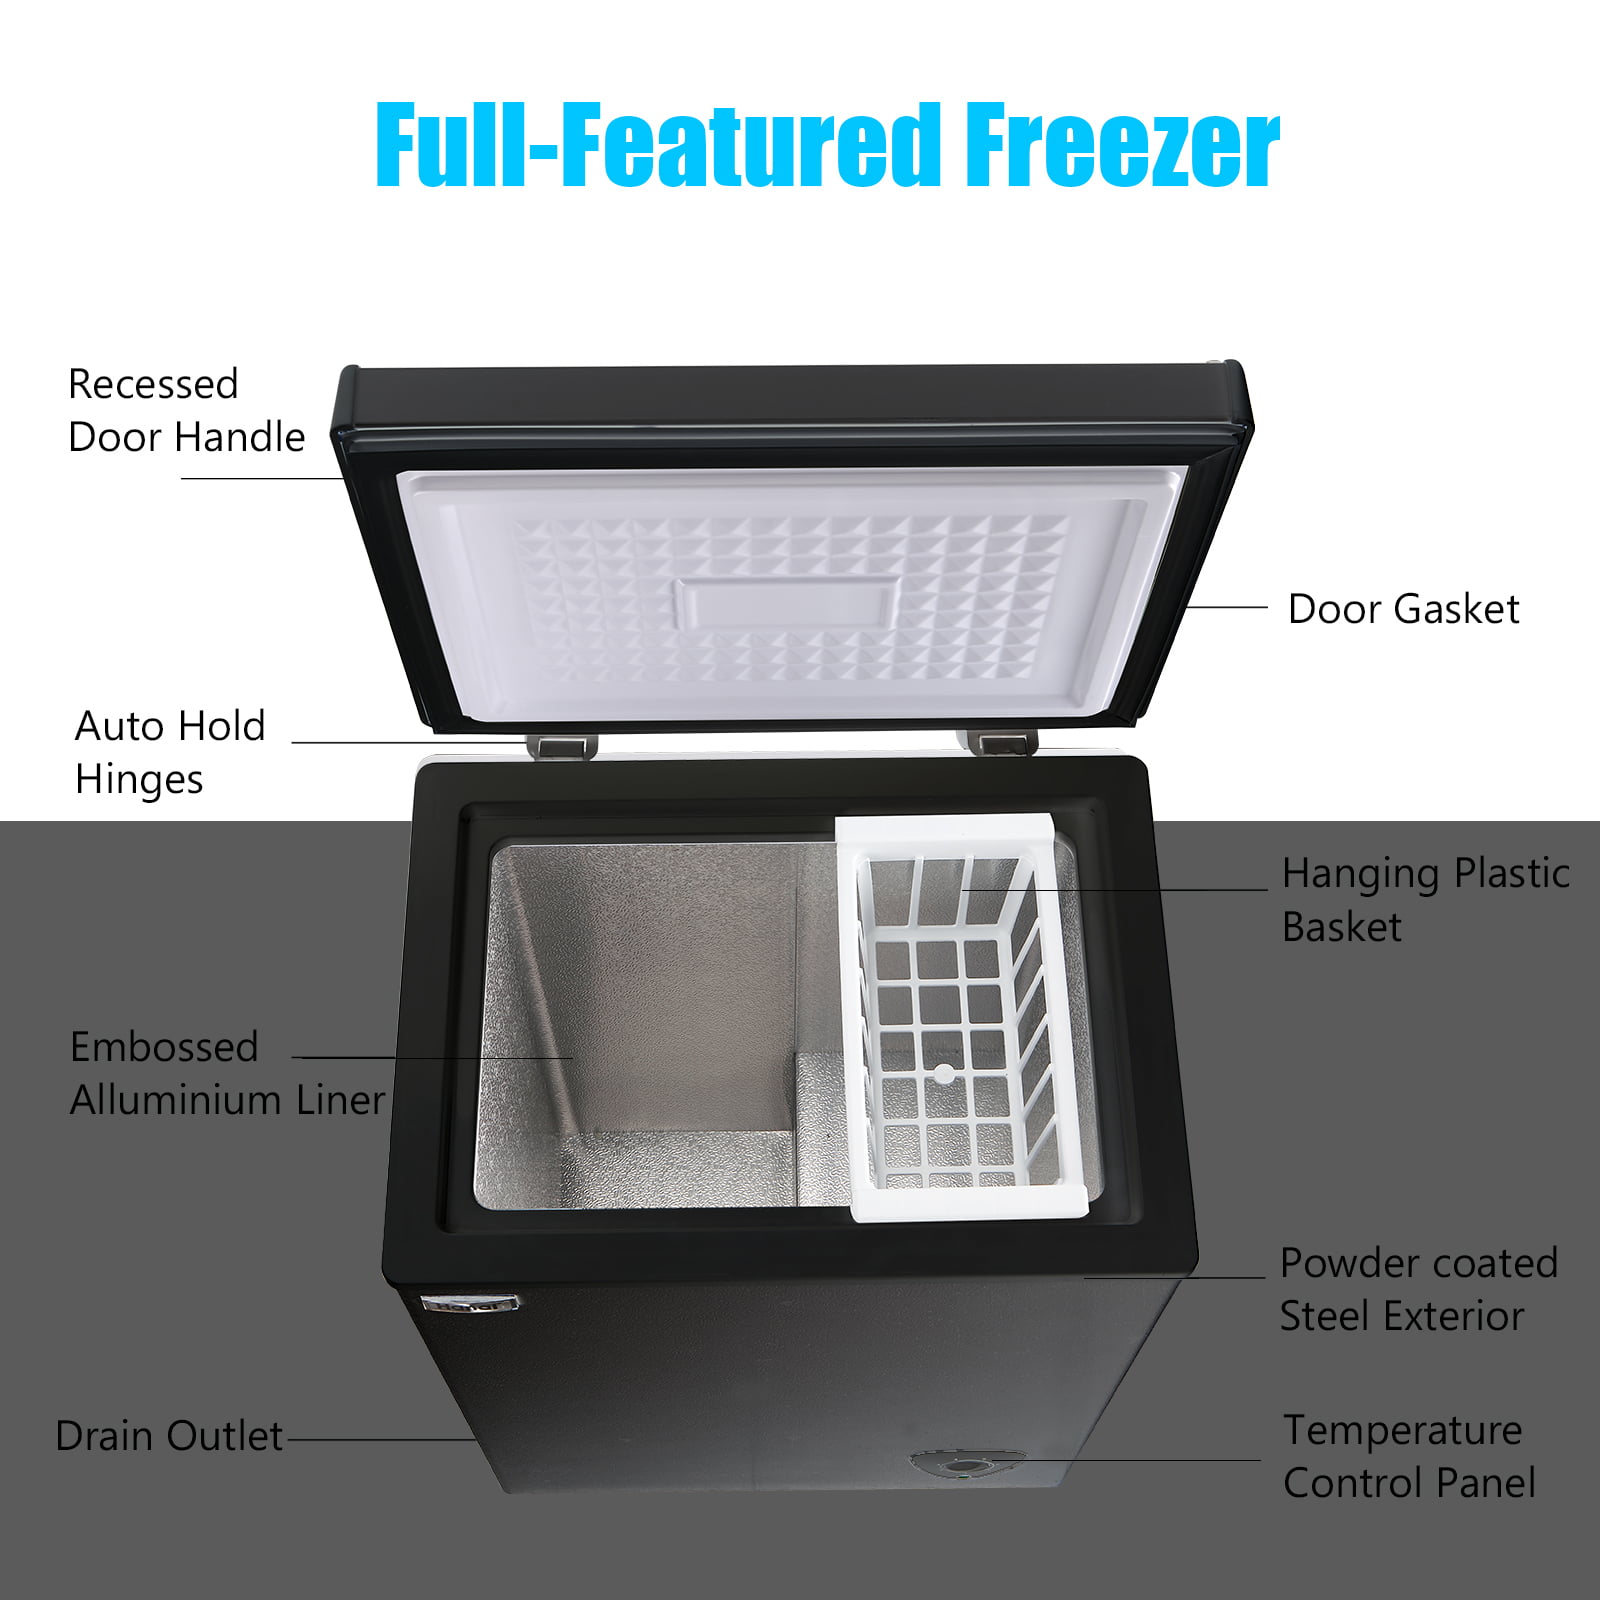 WANAI 3.5 Cubic Feet Chest Freezer Small Deep Freezers with 7 Gears Temp  Control Office Dorm Kitchen Black Model BCBD63 